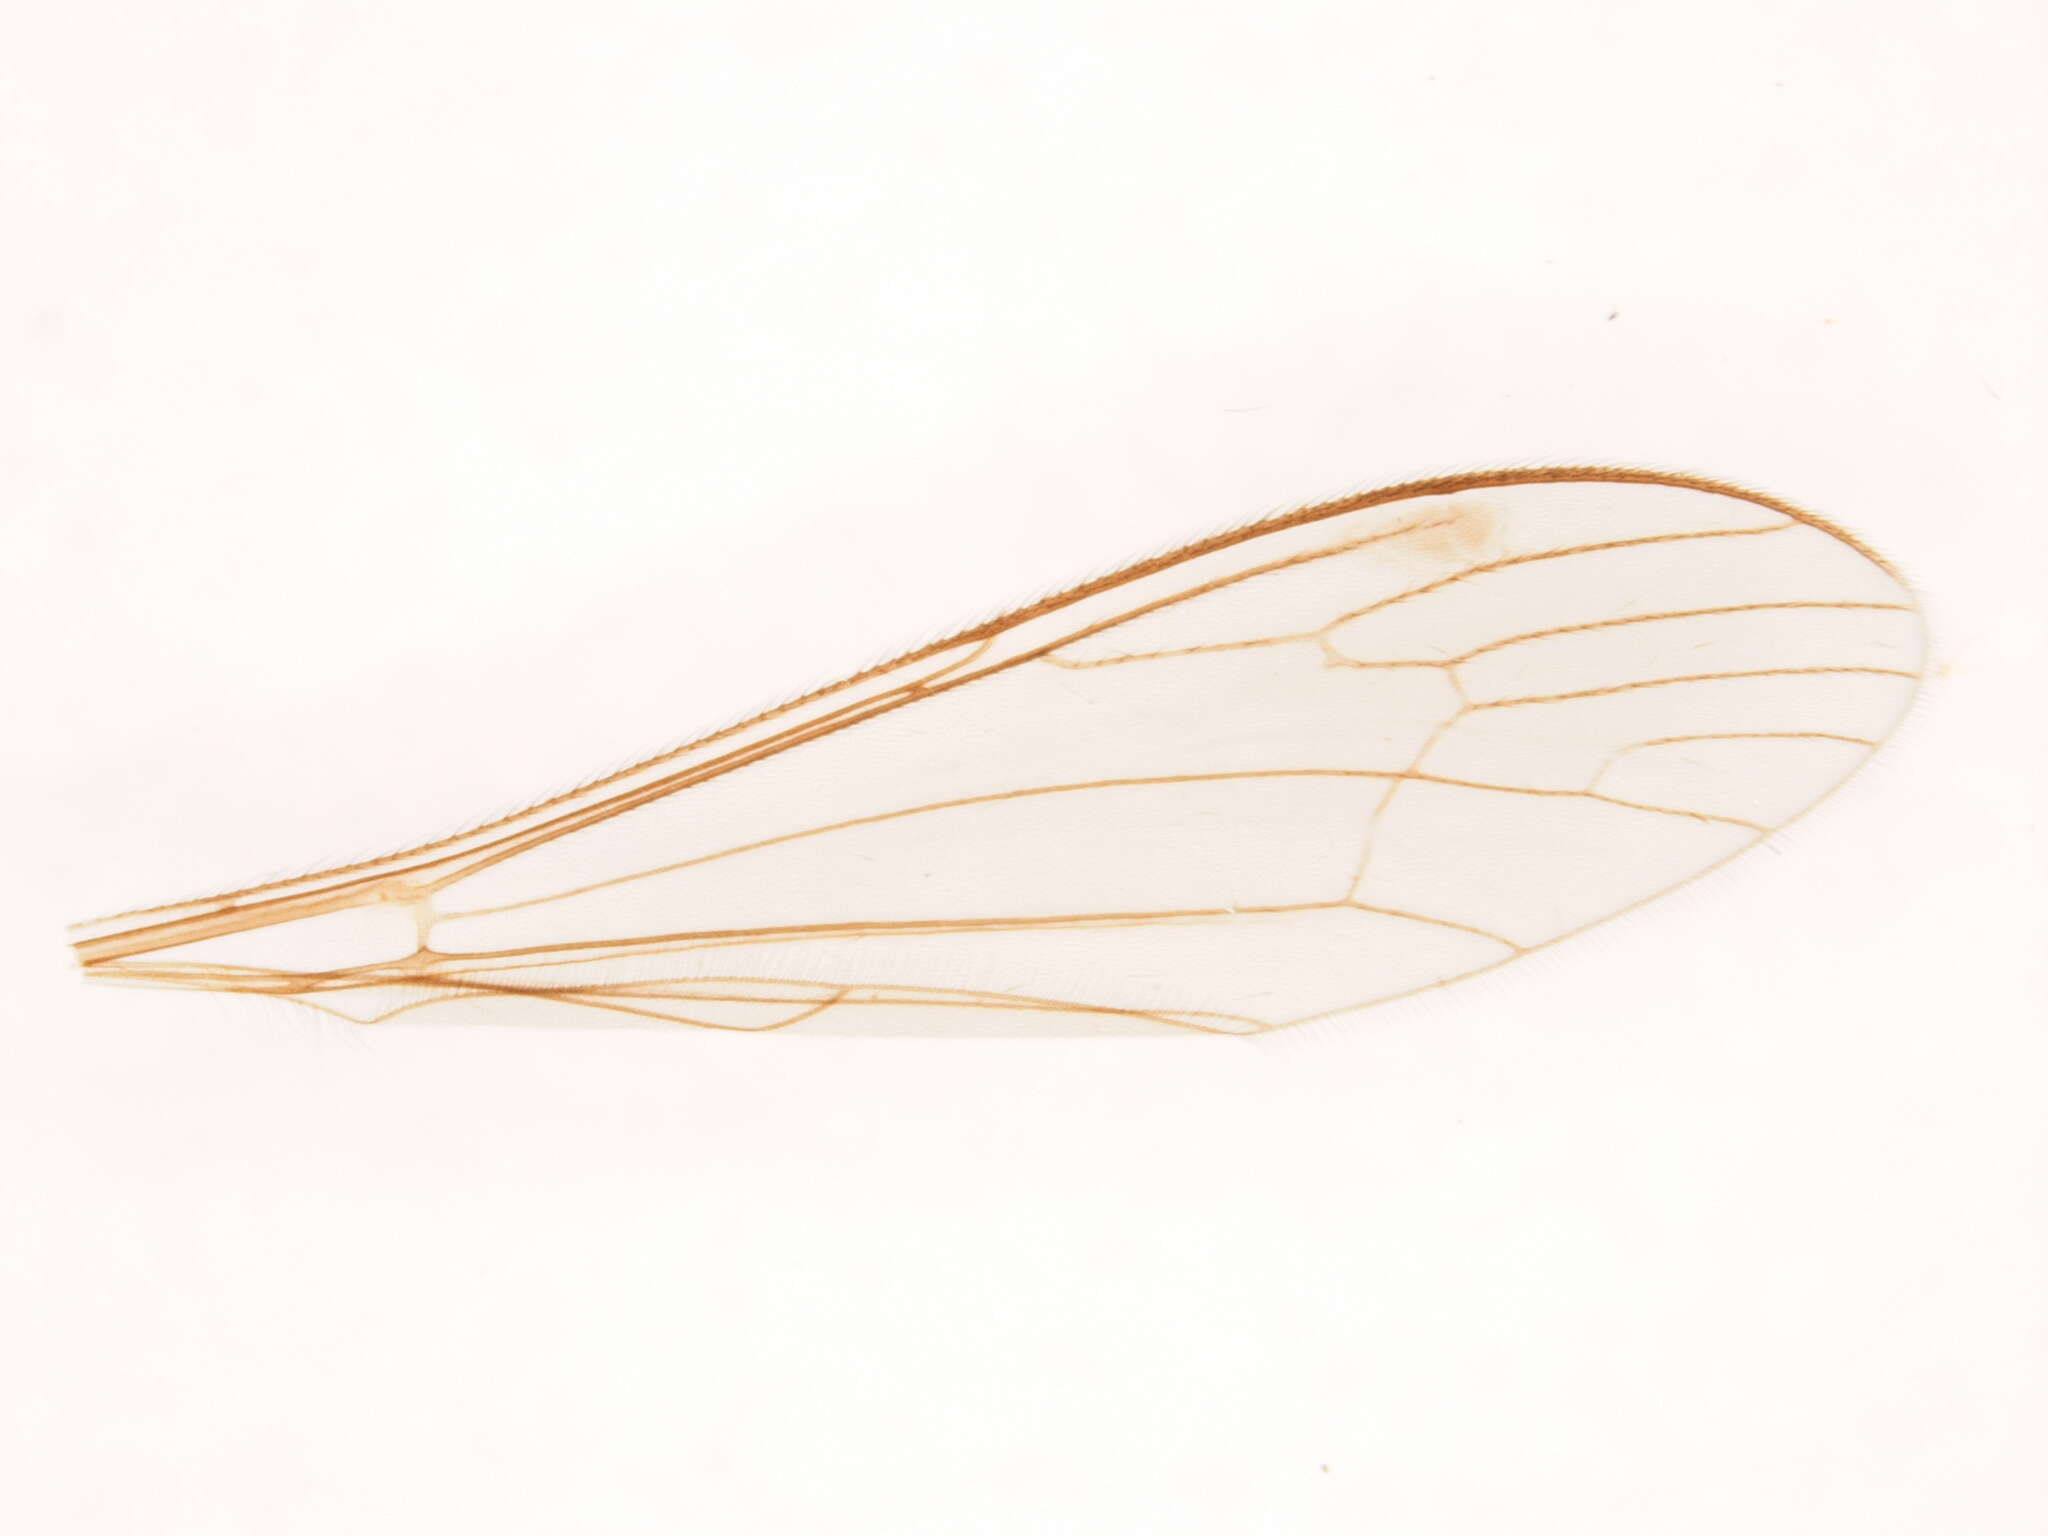 Image of Dicranomyia (Dicranomyia) swezeyi Alexander 1919